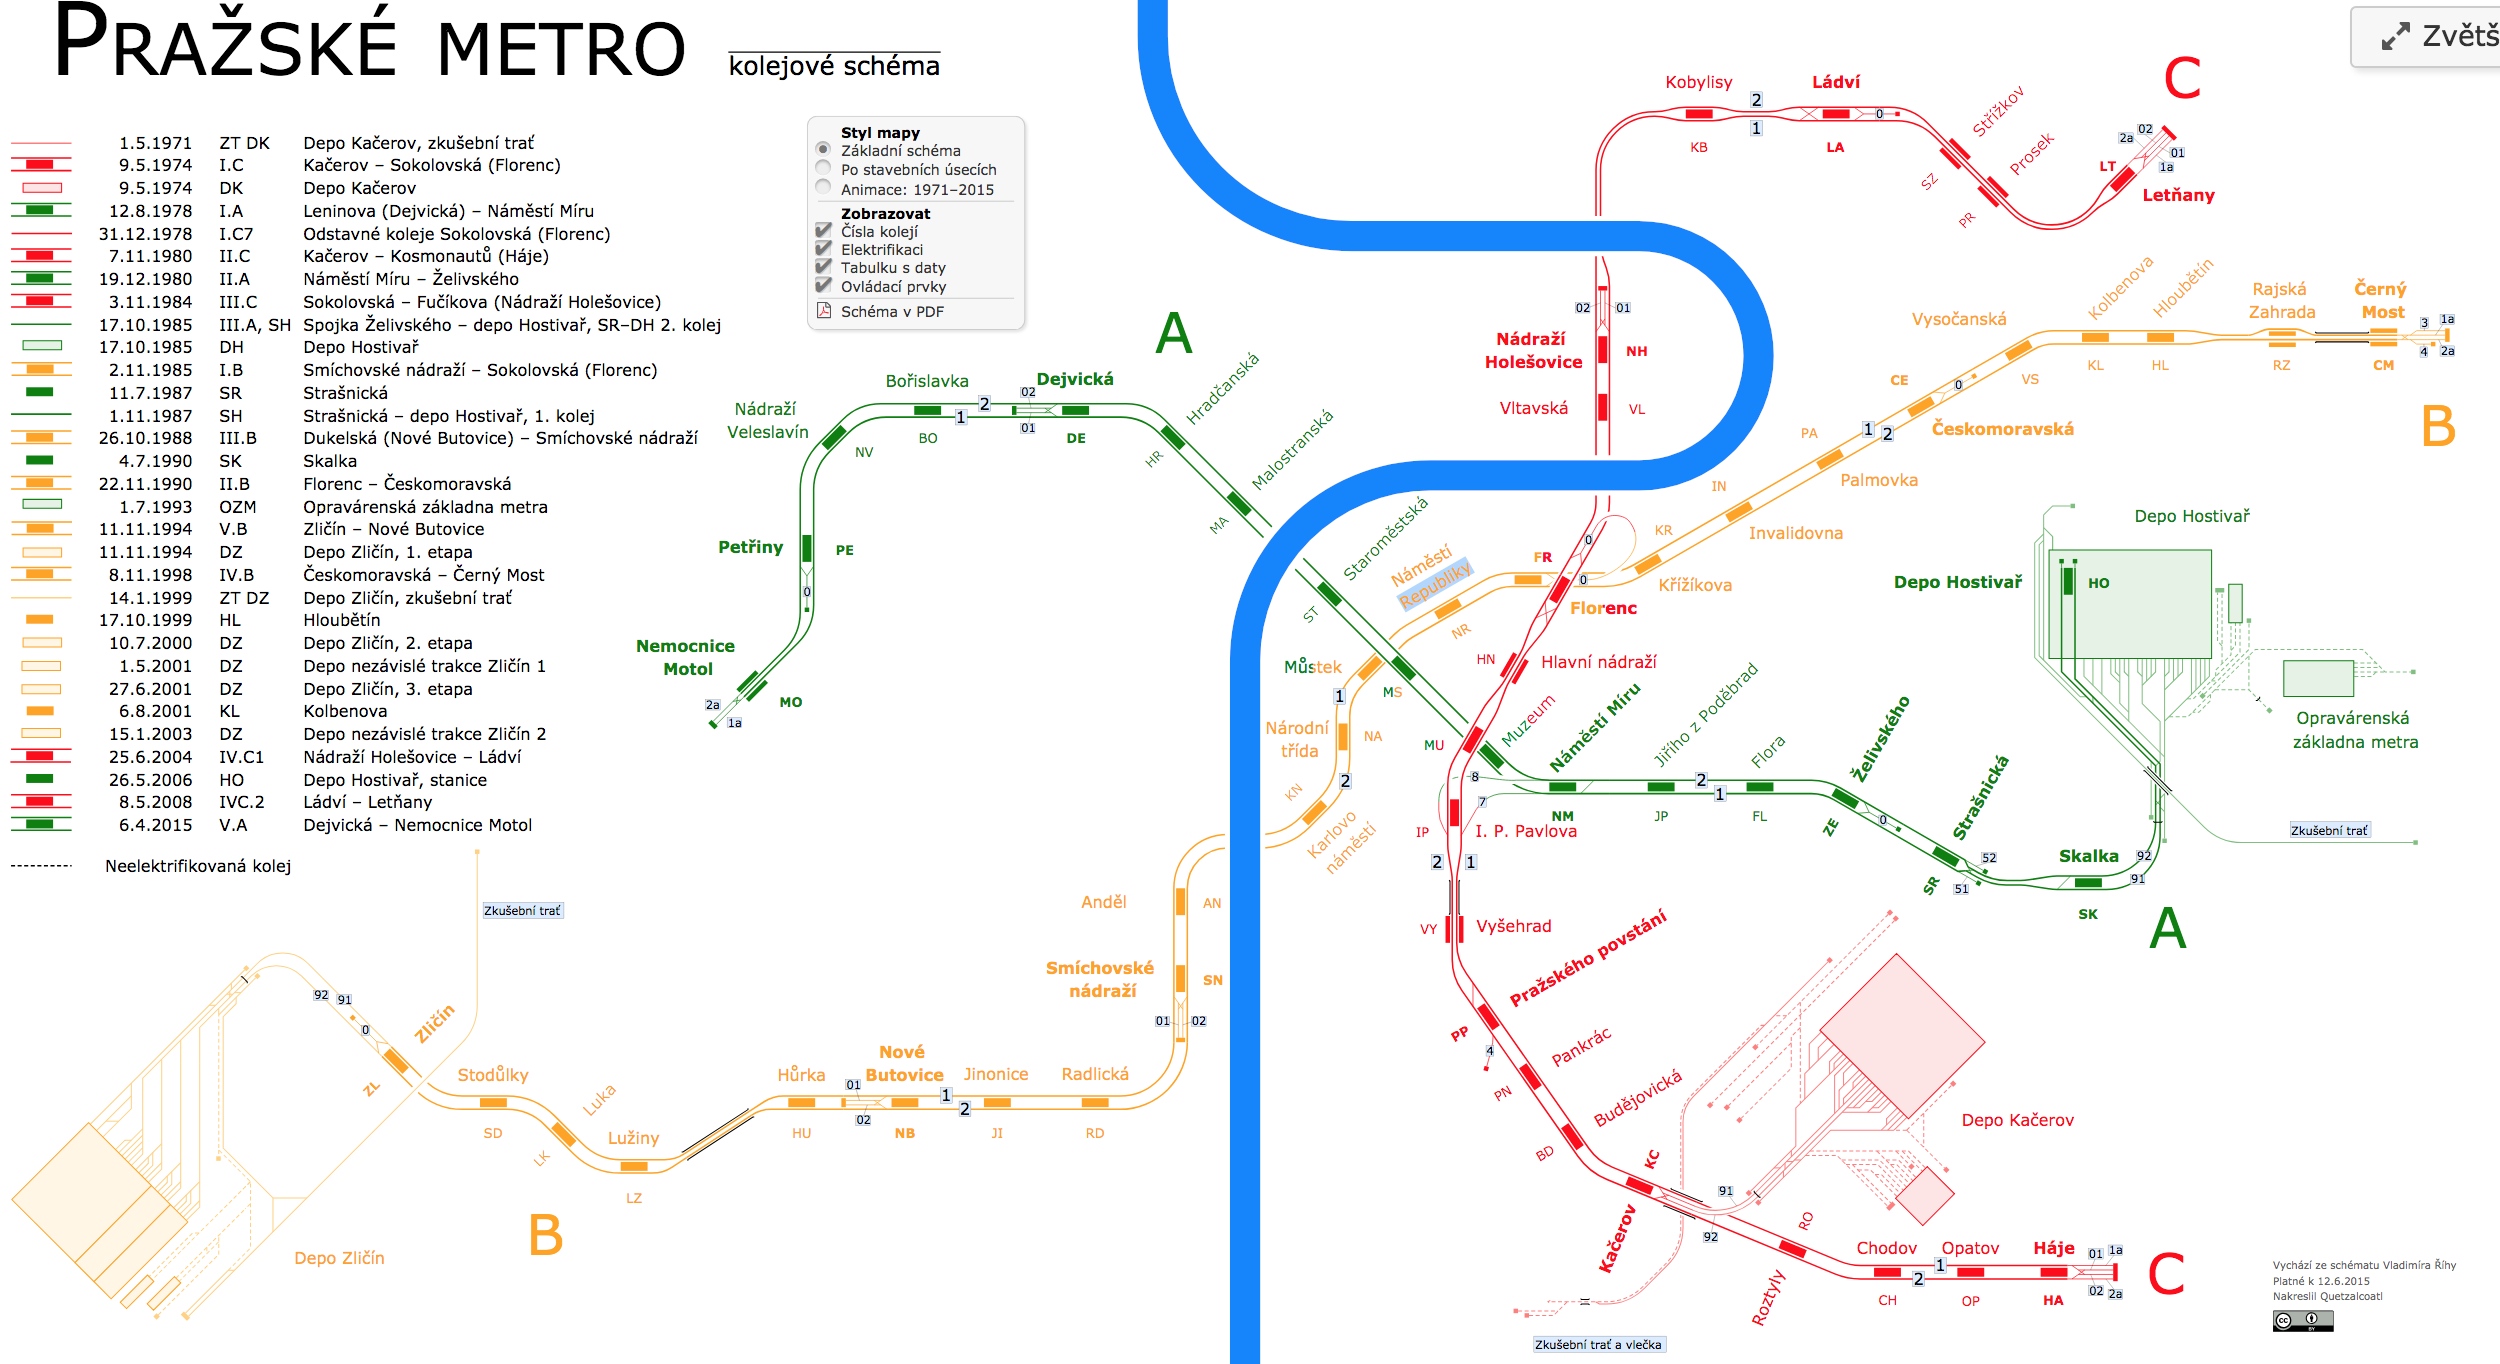 Карта пражского метро